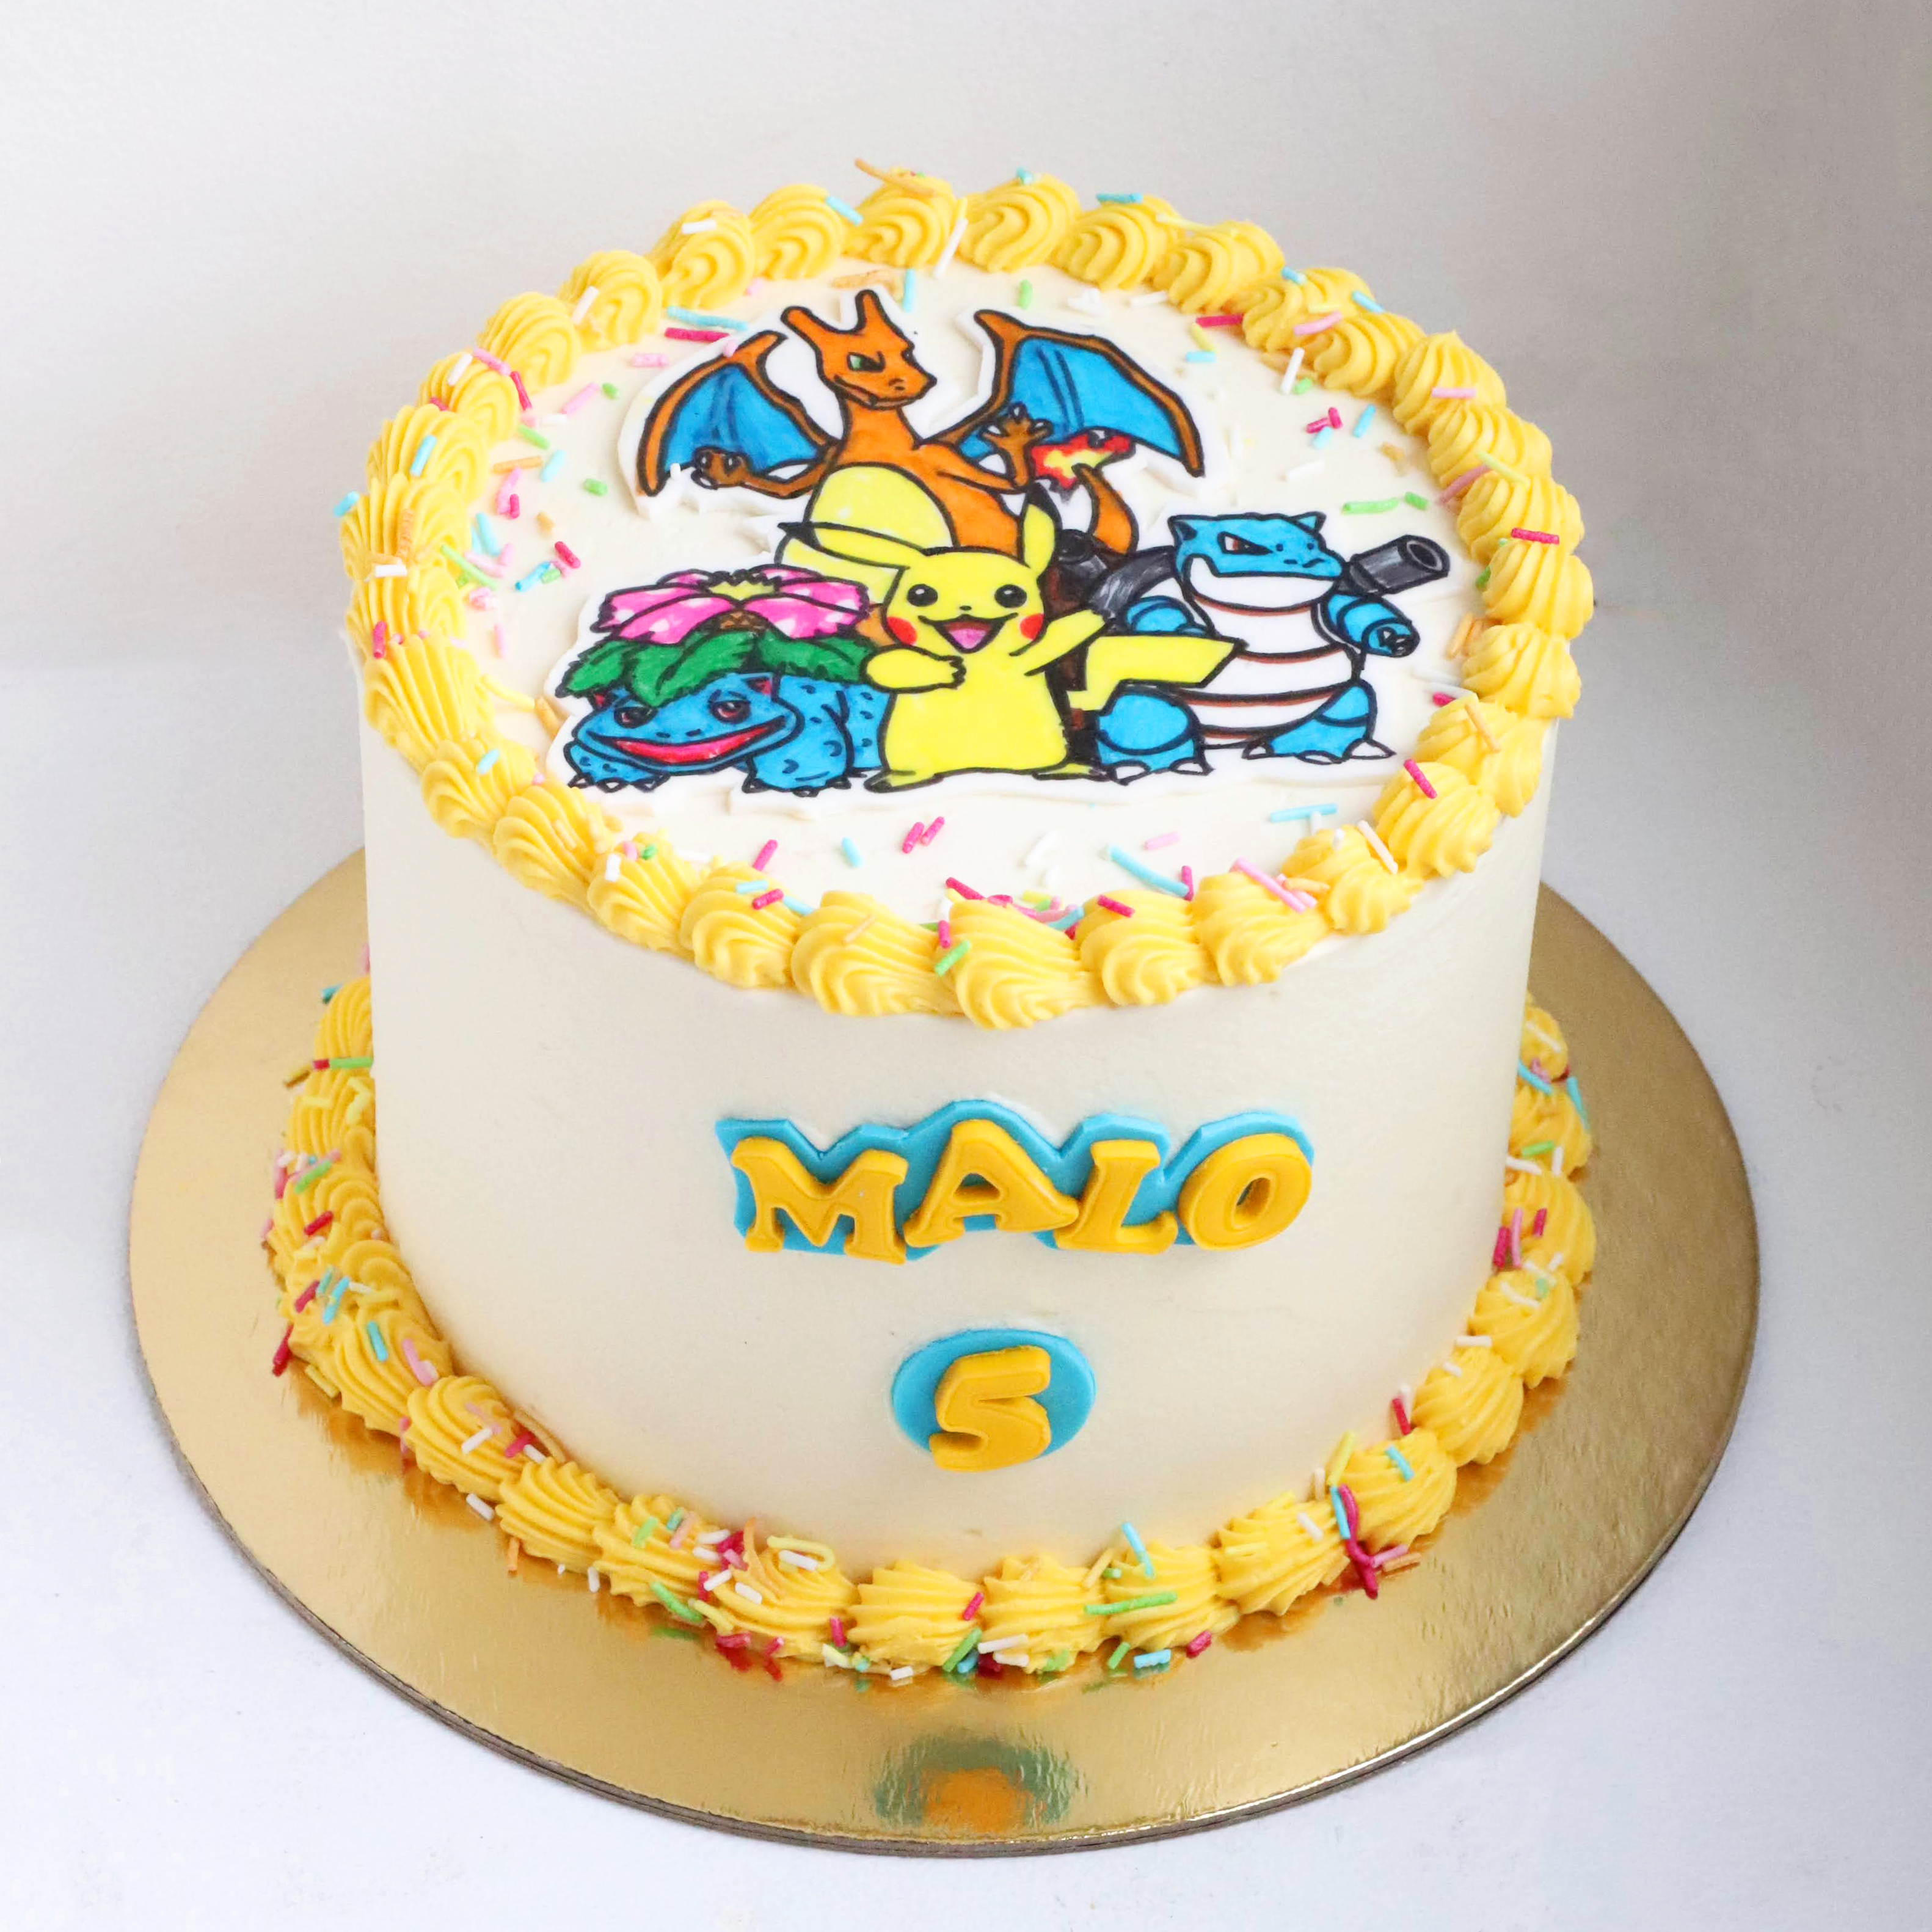 Easy Pokemon Cake {Pokeball Cake} - CakeWhiz